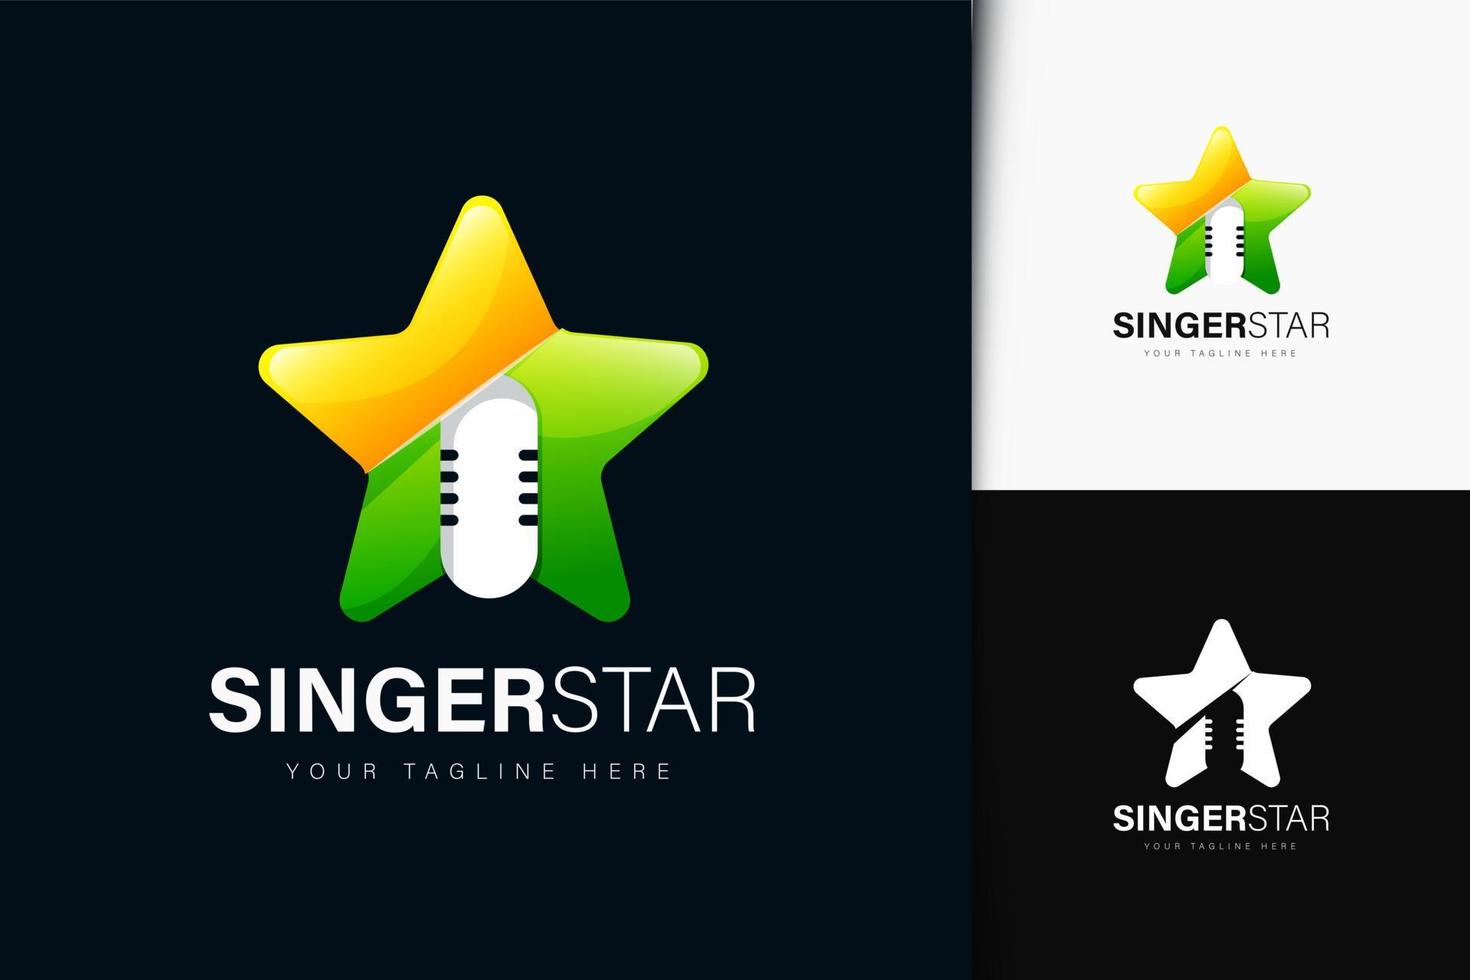 Singer star logo design with gradient vector